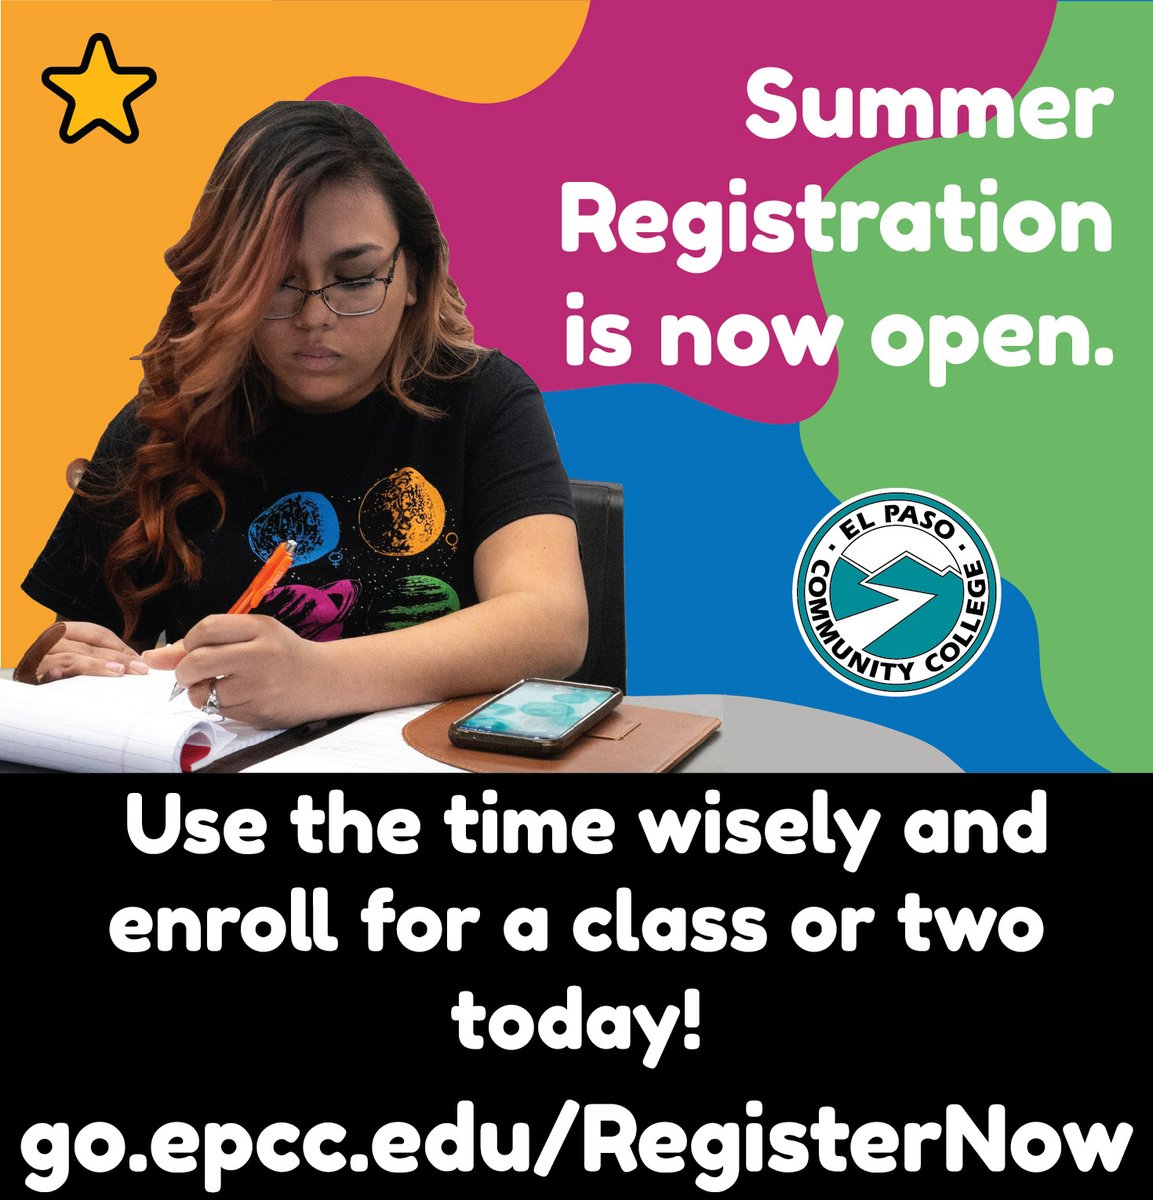 Register for summer courses at go.epcc.edu/RegisterNow. @epccrecruitment